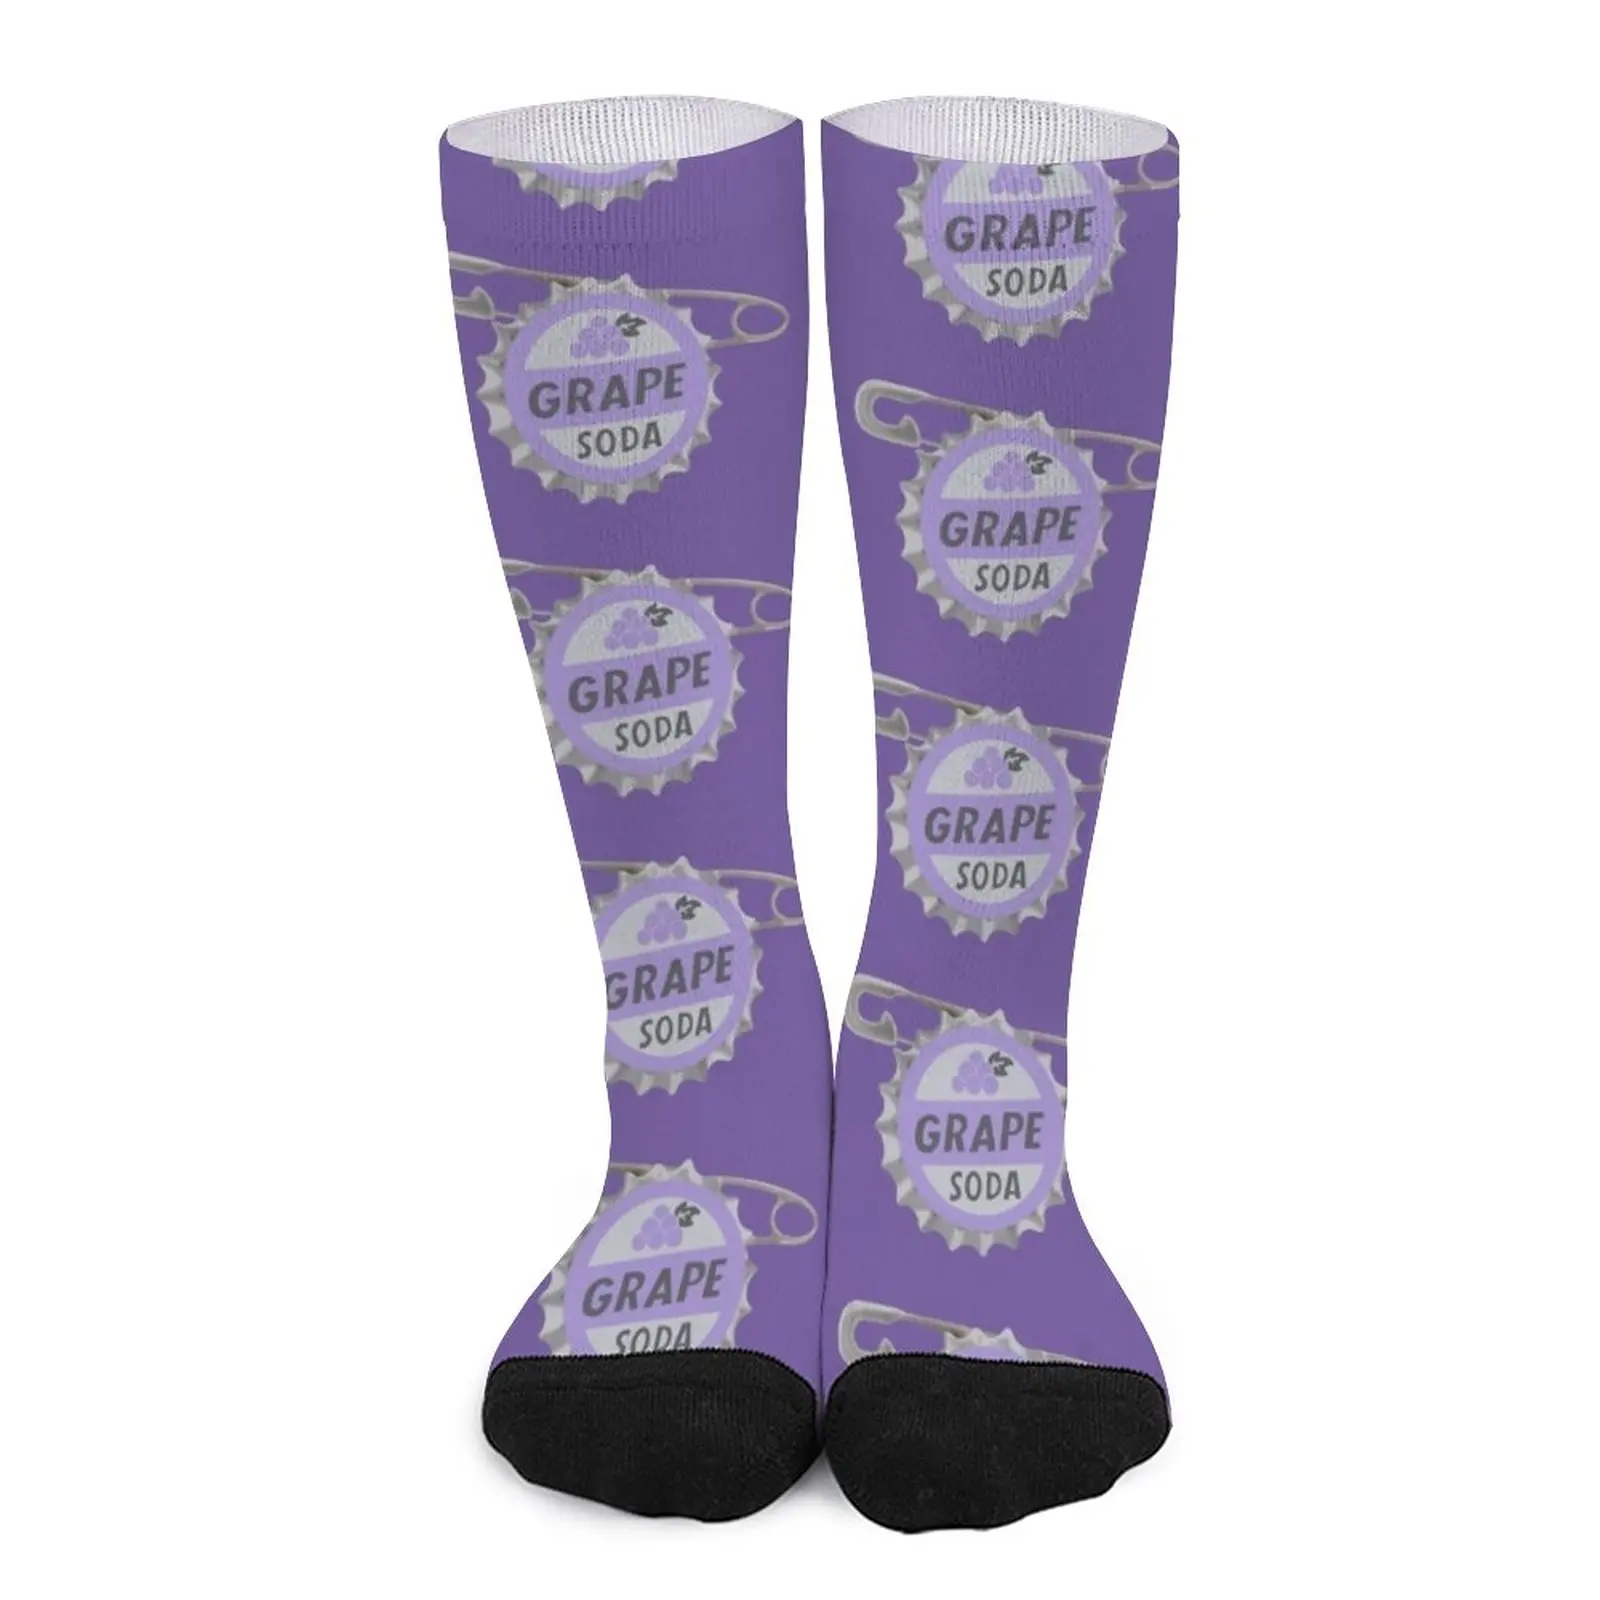 UP Grape Soda Pin Socks Rugby Men's socks Sock man Stockings